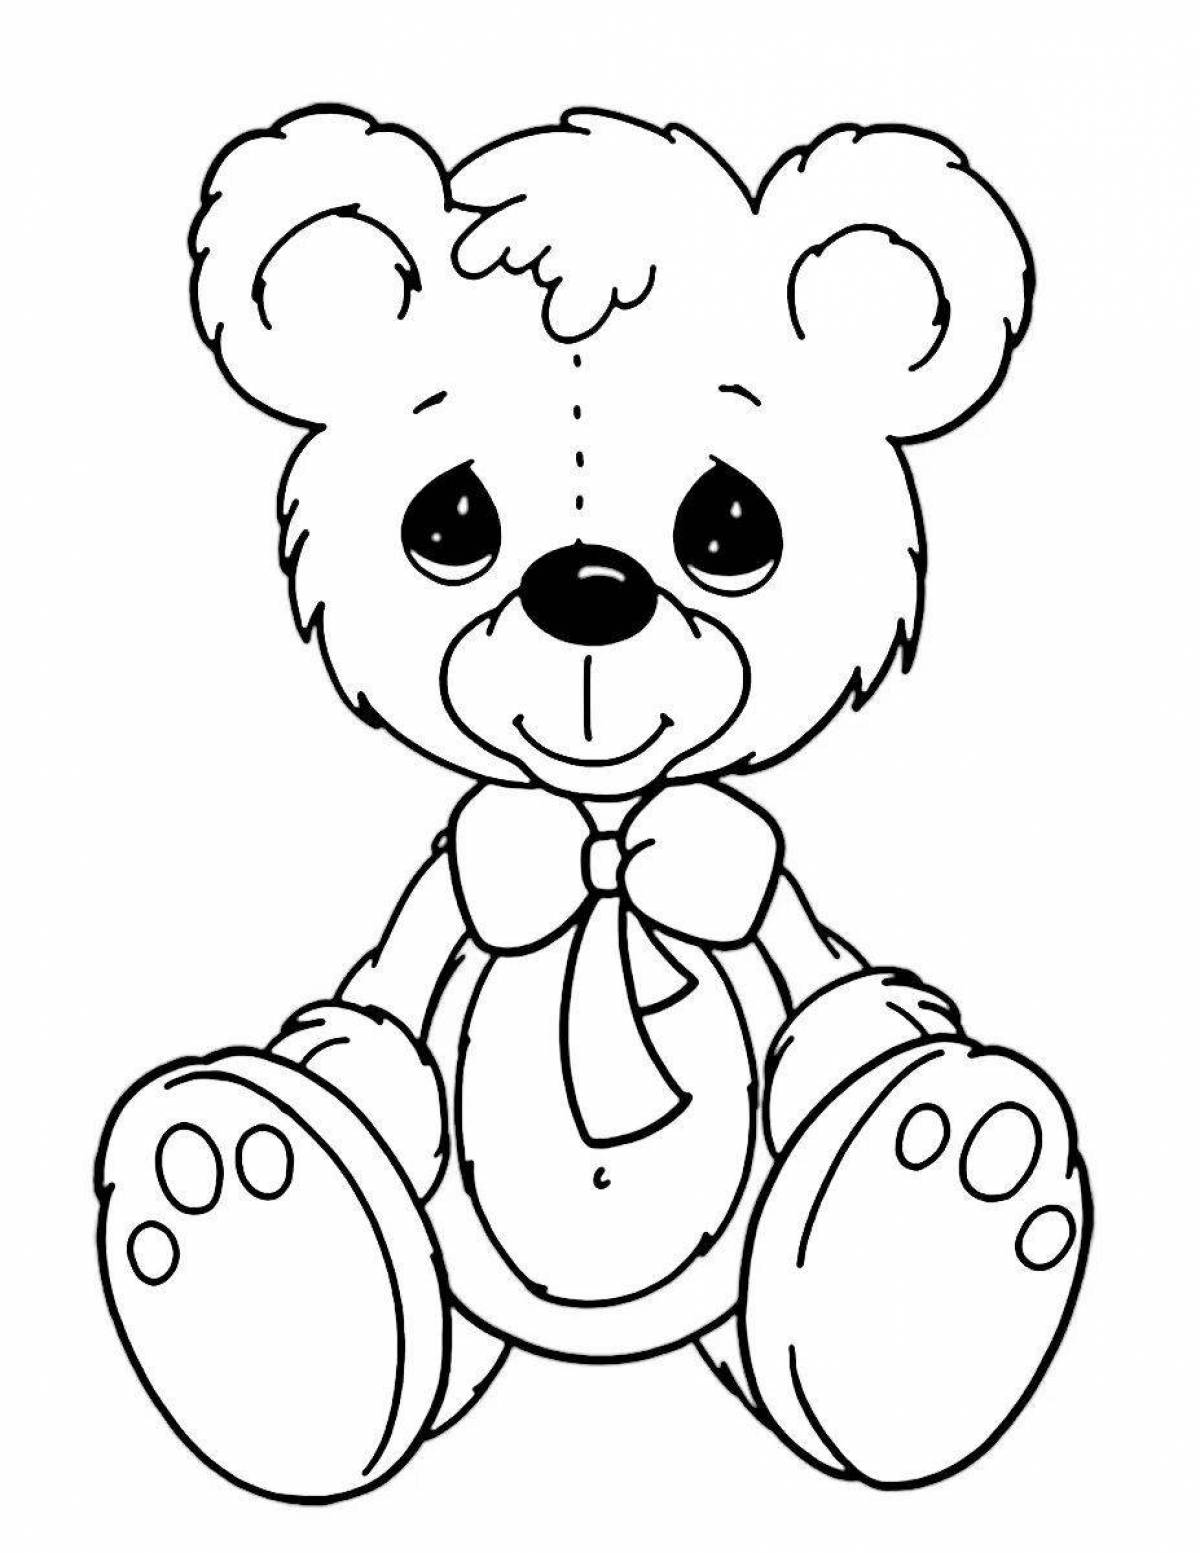 Coloring playful teddy bear